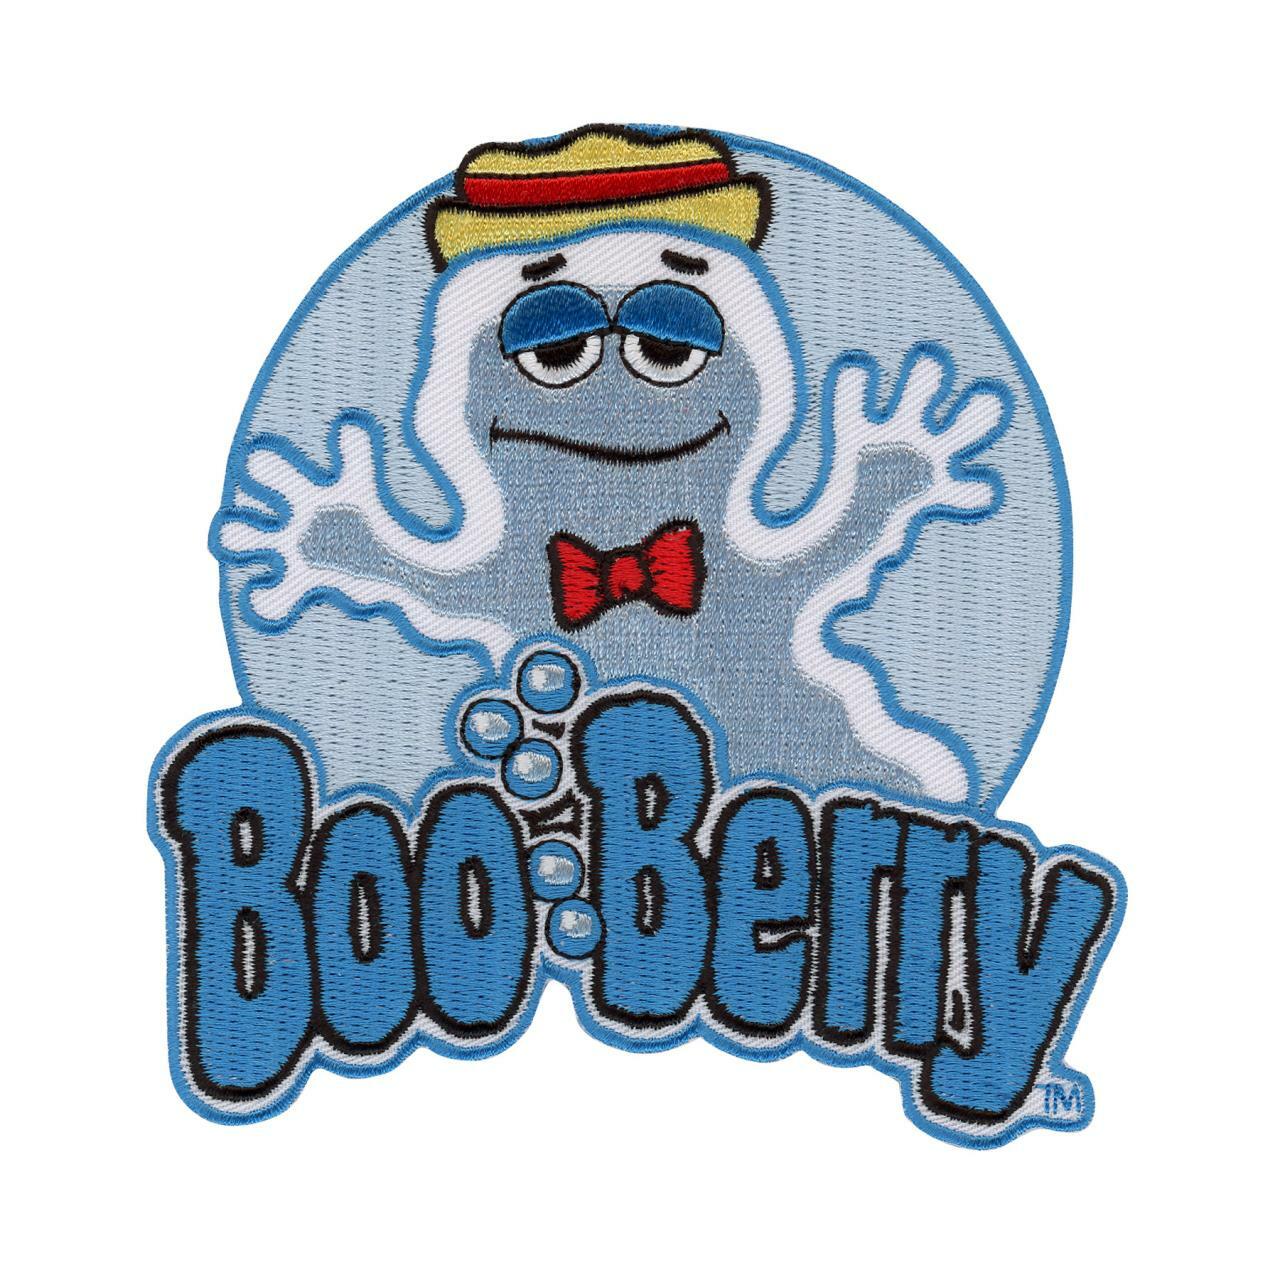 Boo Berry